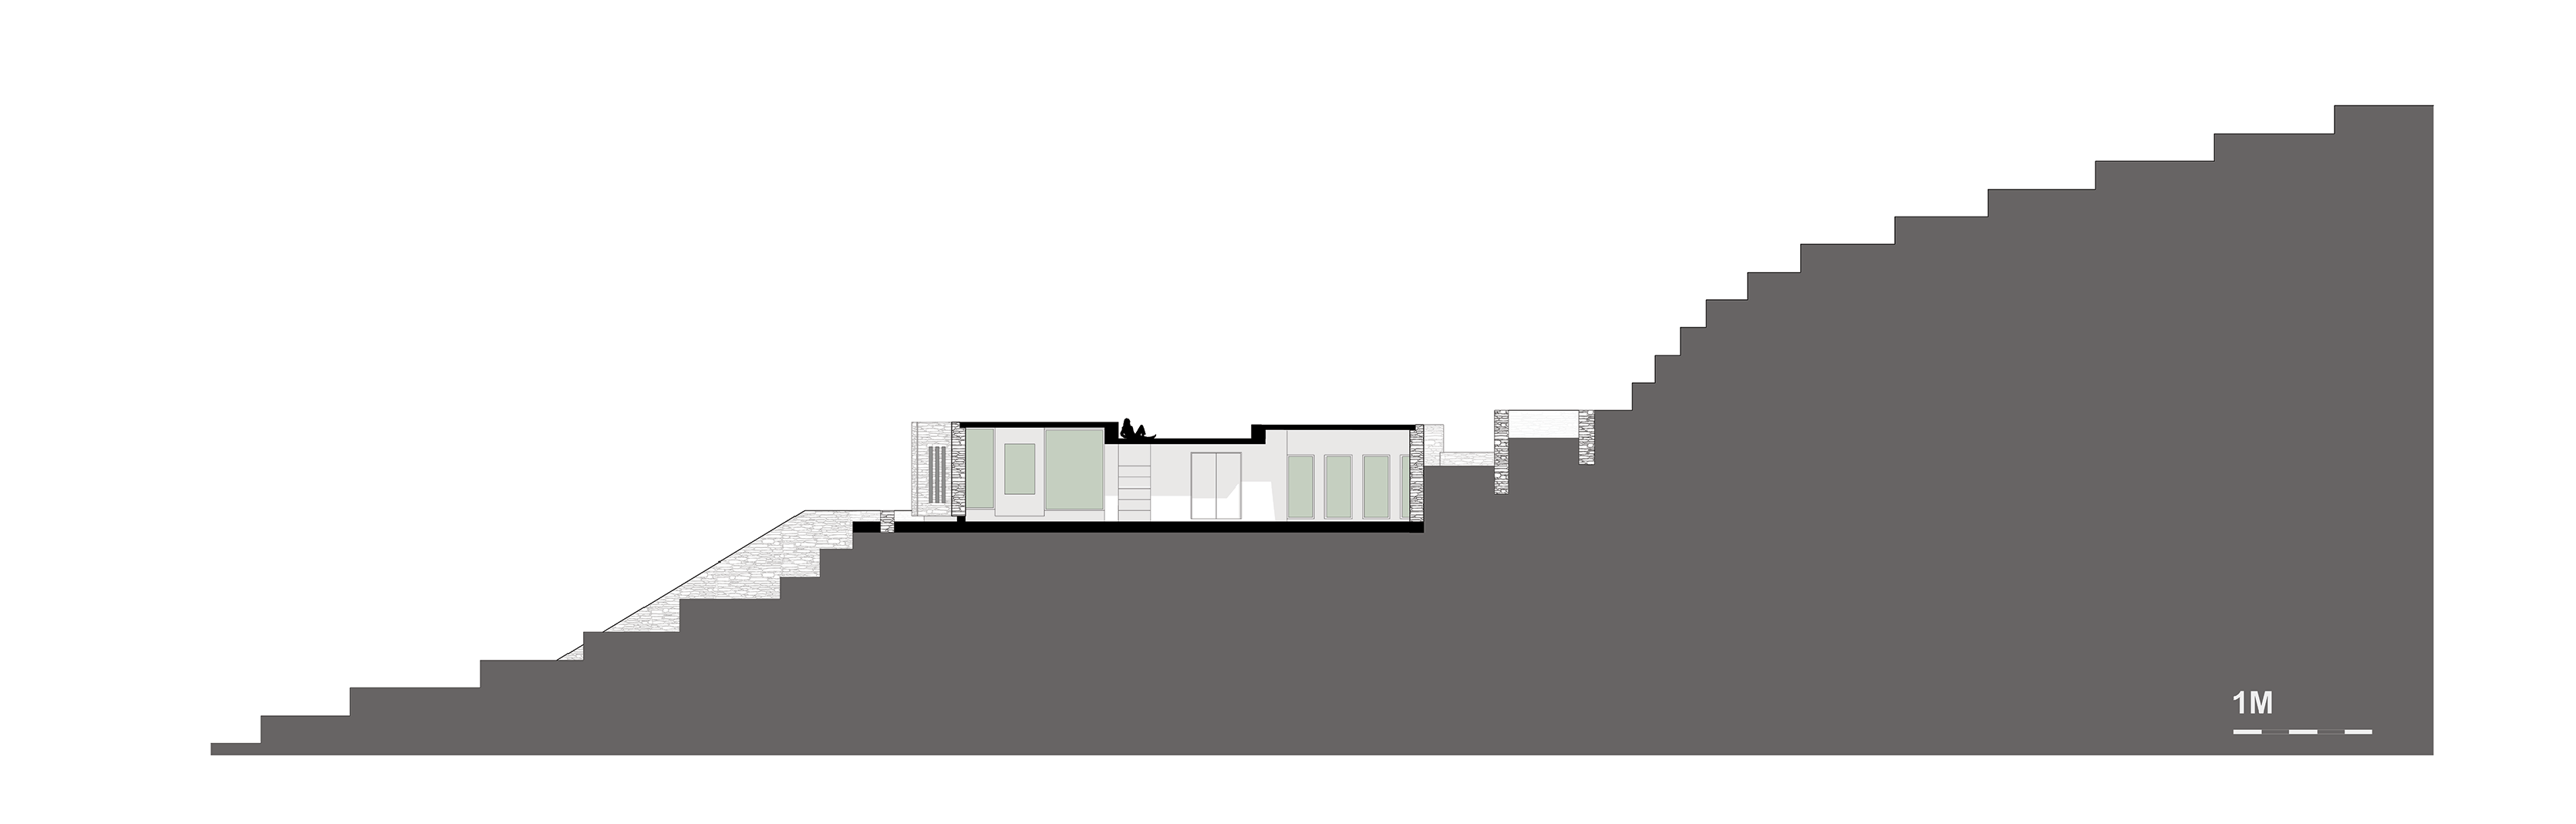 Evripiotis Architects--Telegraph Summer House, Paros Island